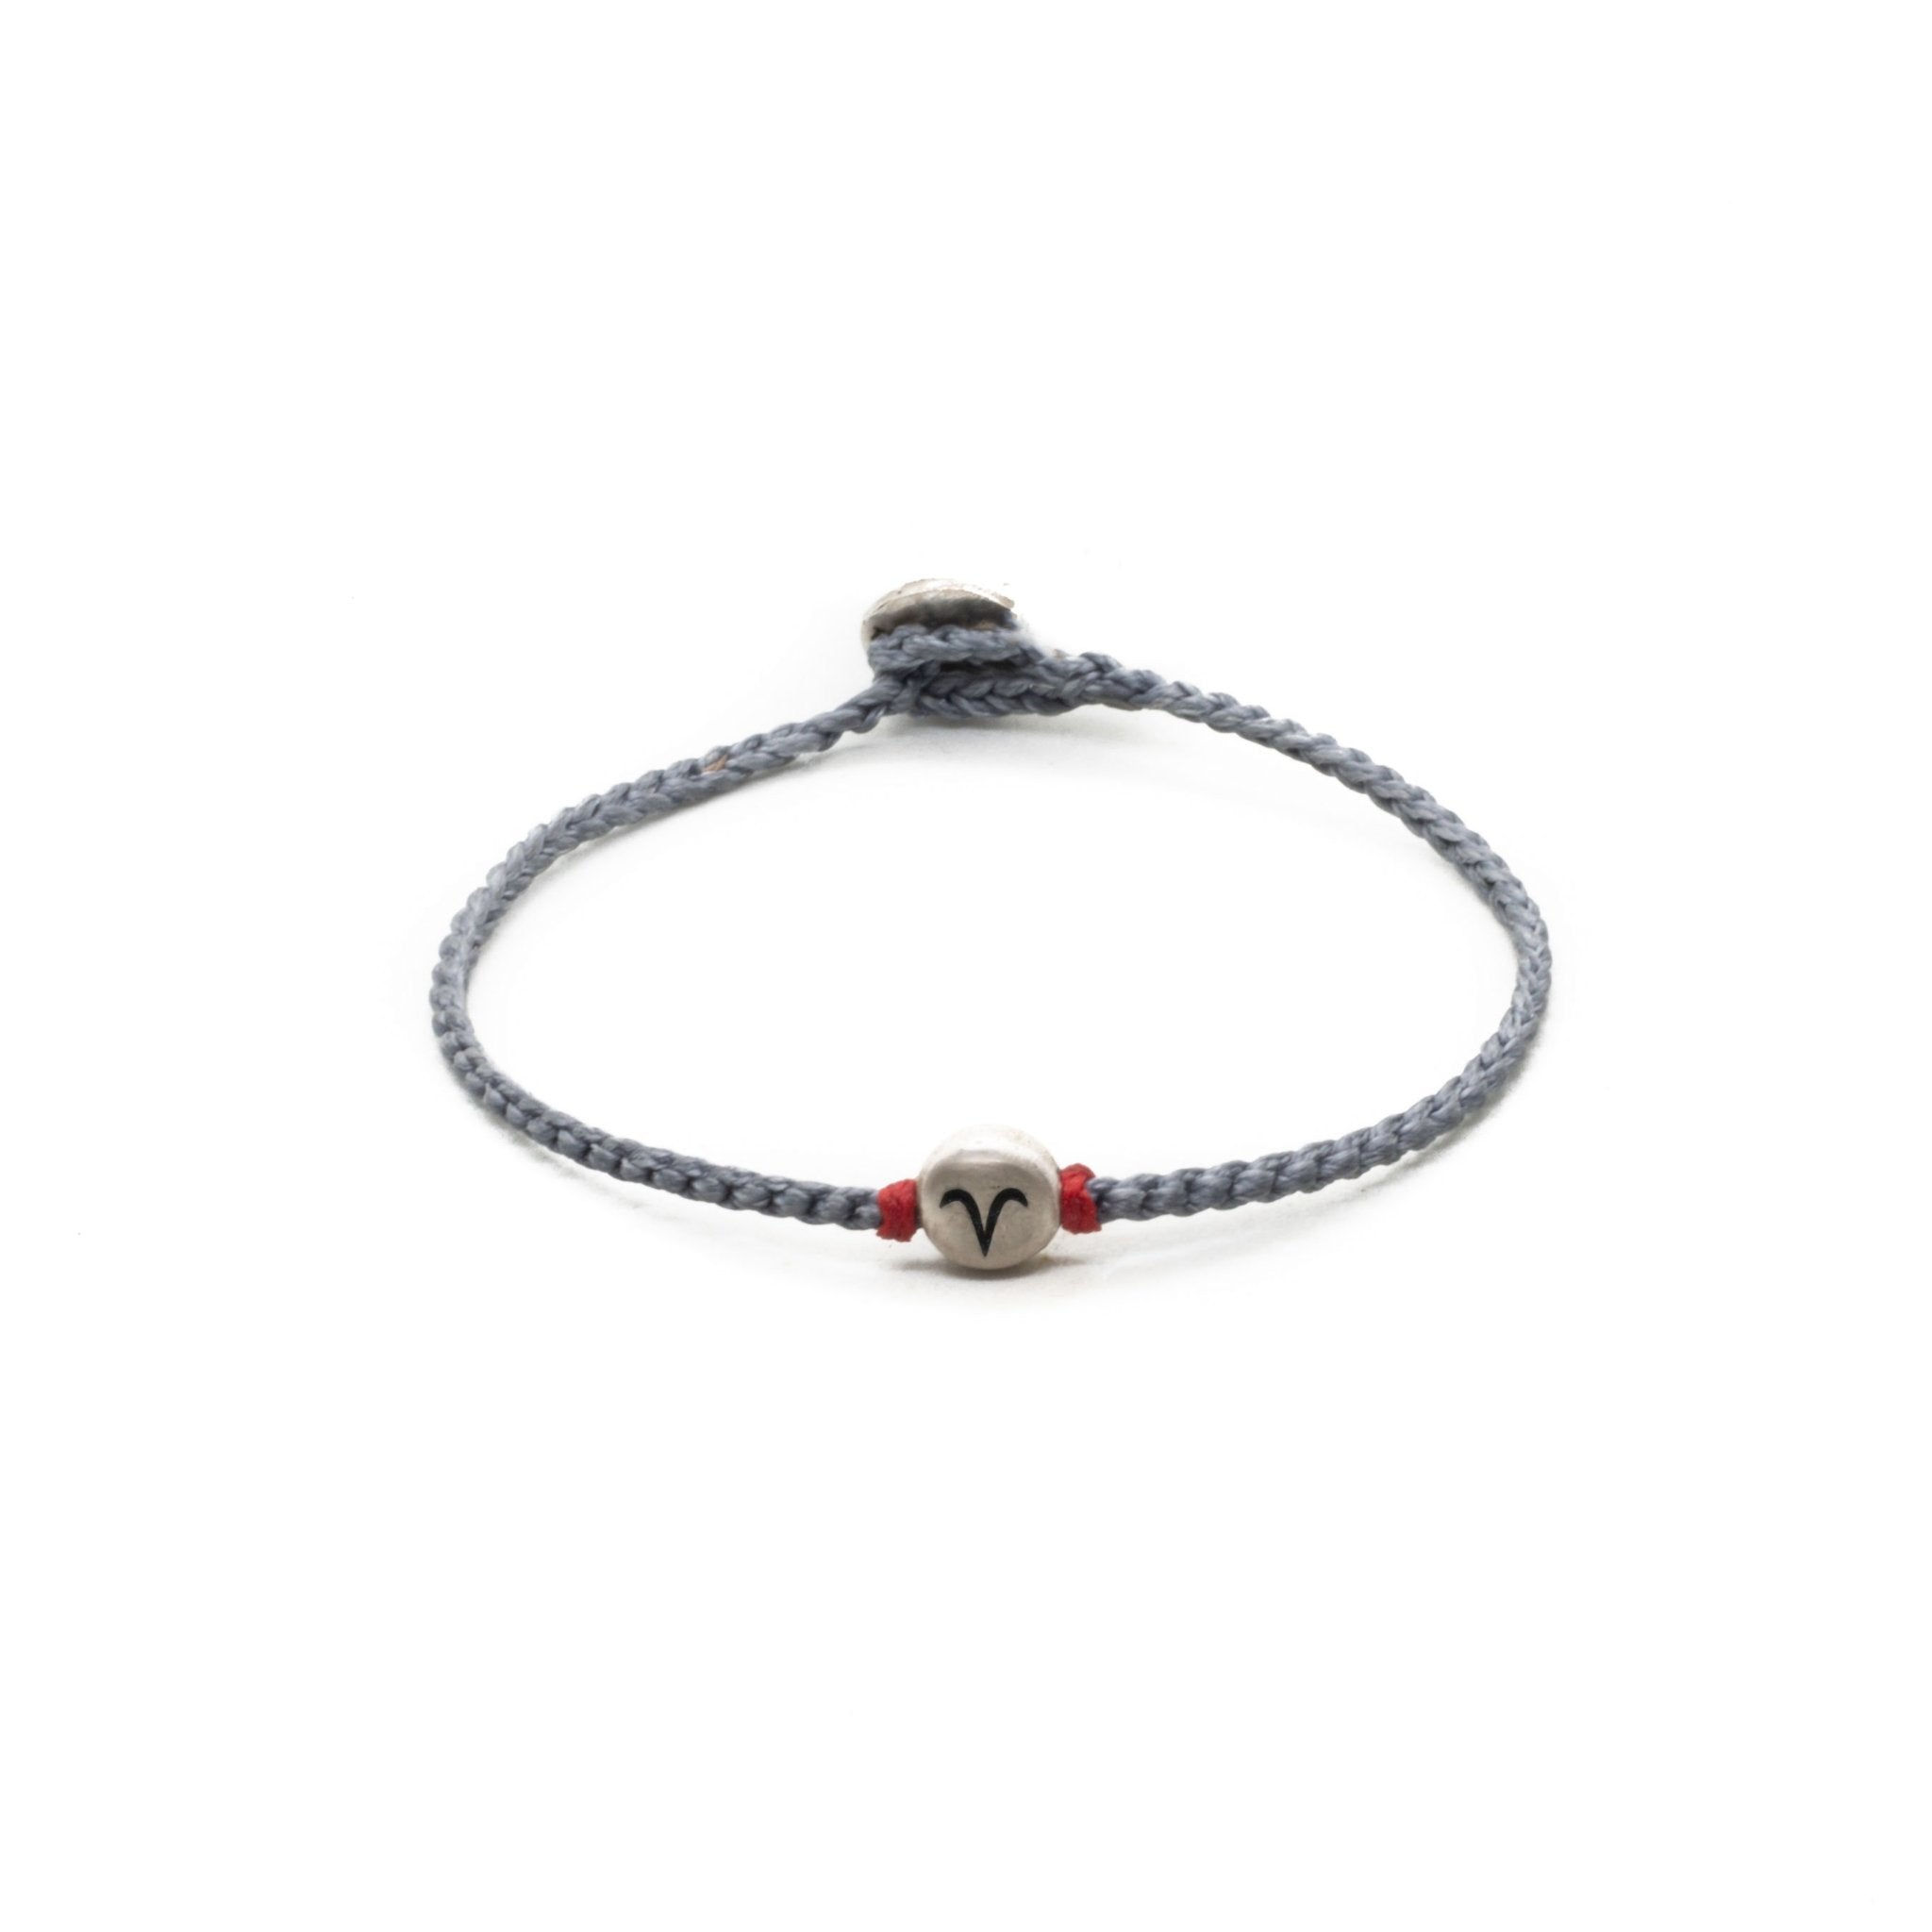 Silver Aries zodiac sign bracelet with grey hand braided chain.